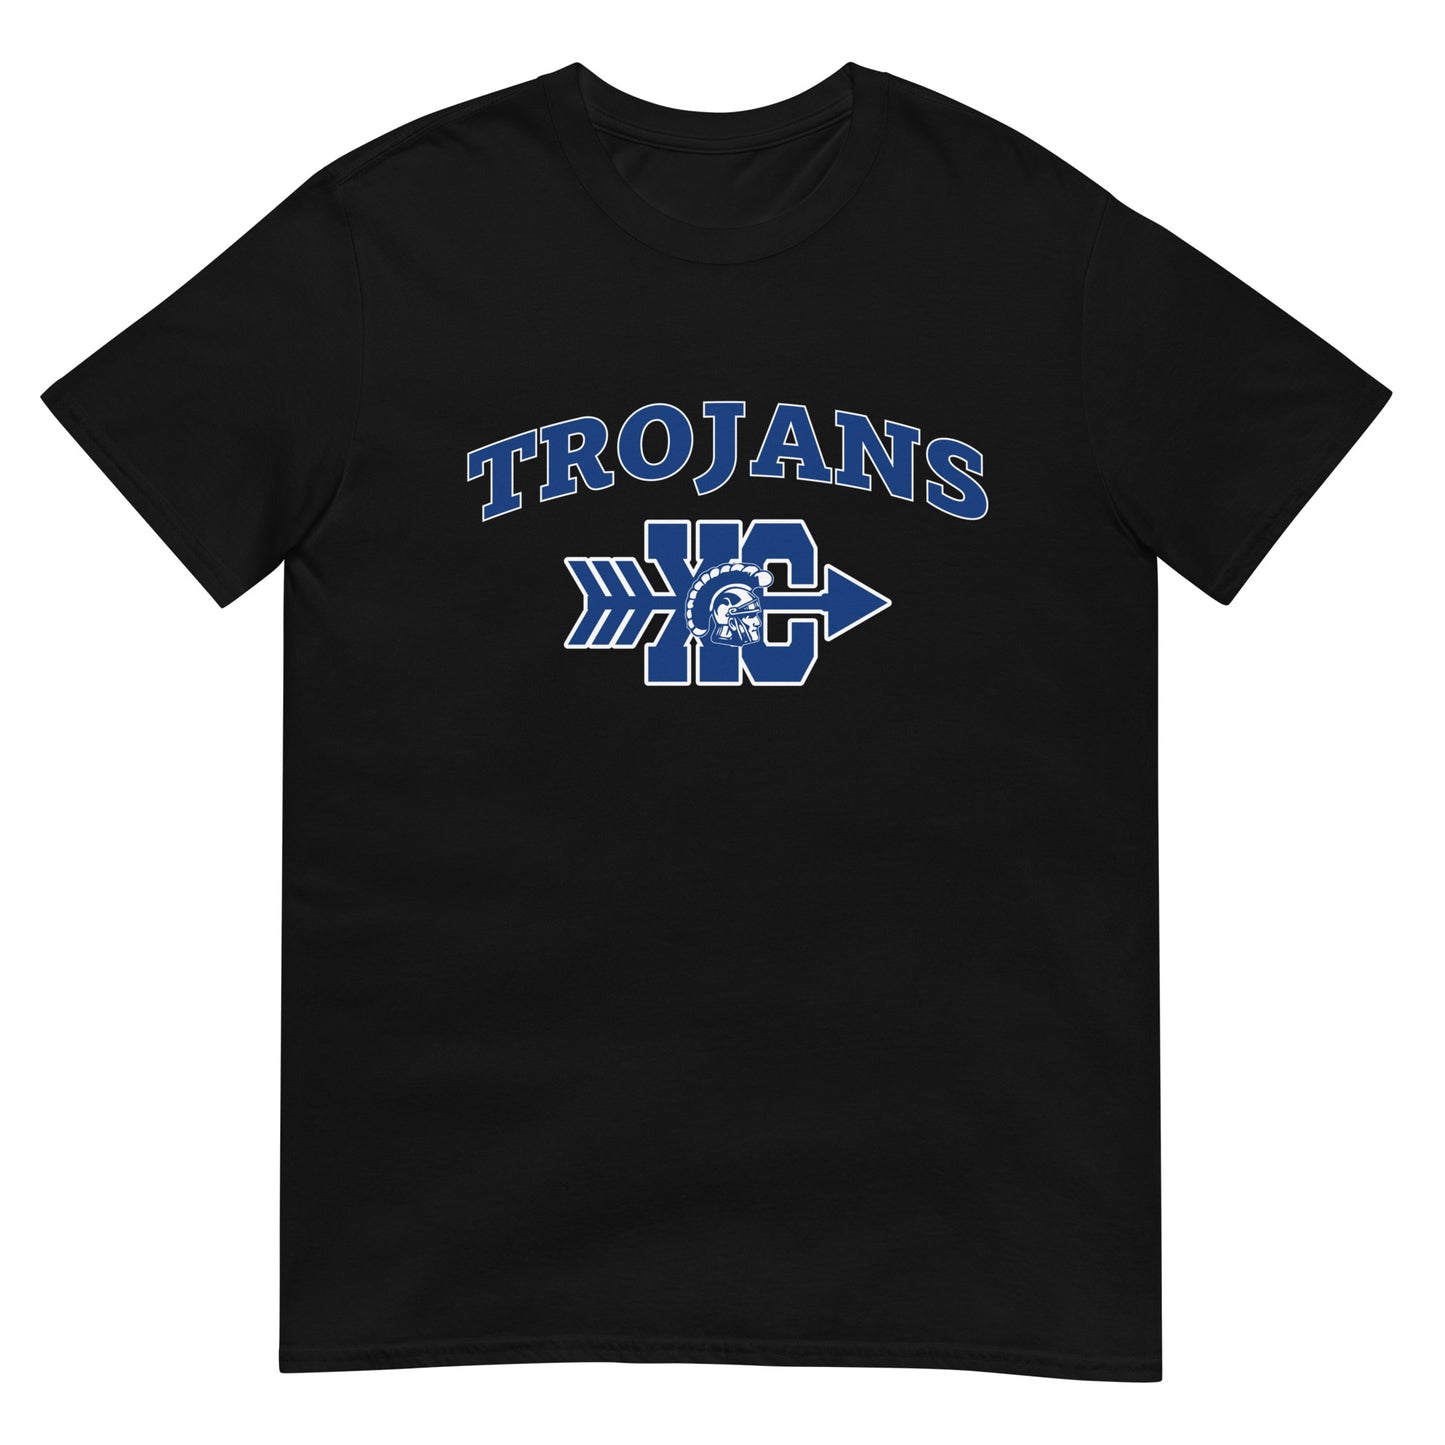 Trojan Cross Country Short-Sleeve Unisex T-Shirt